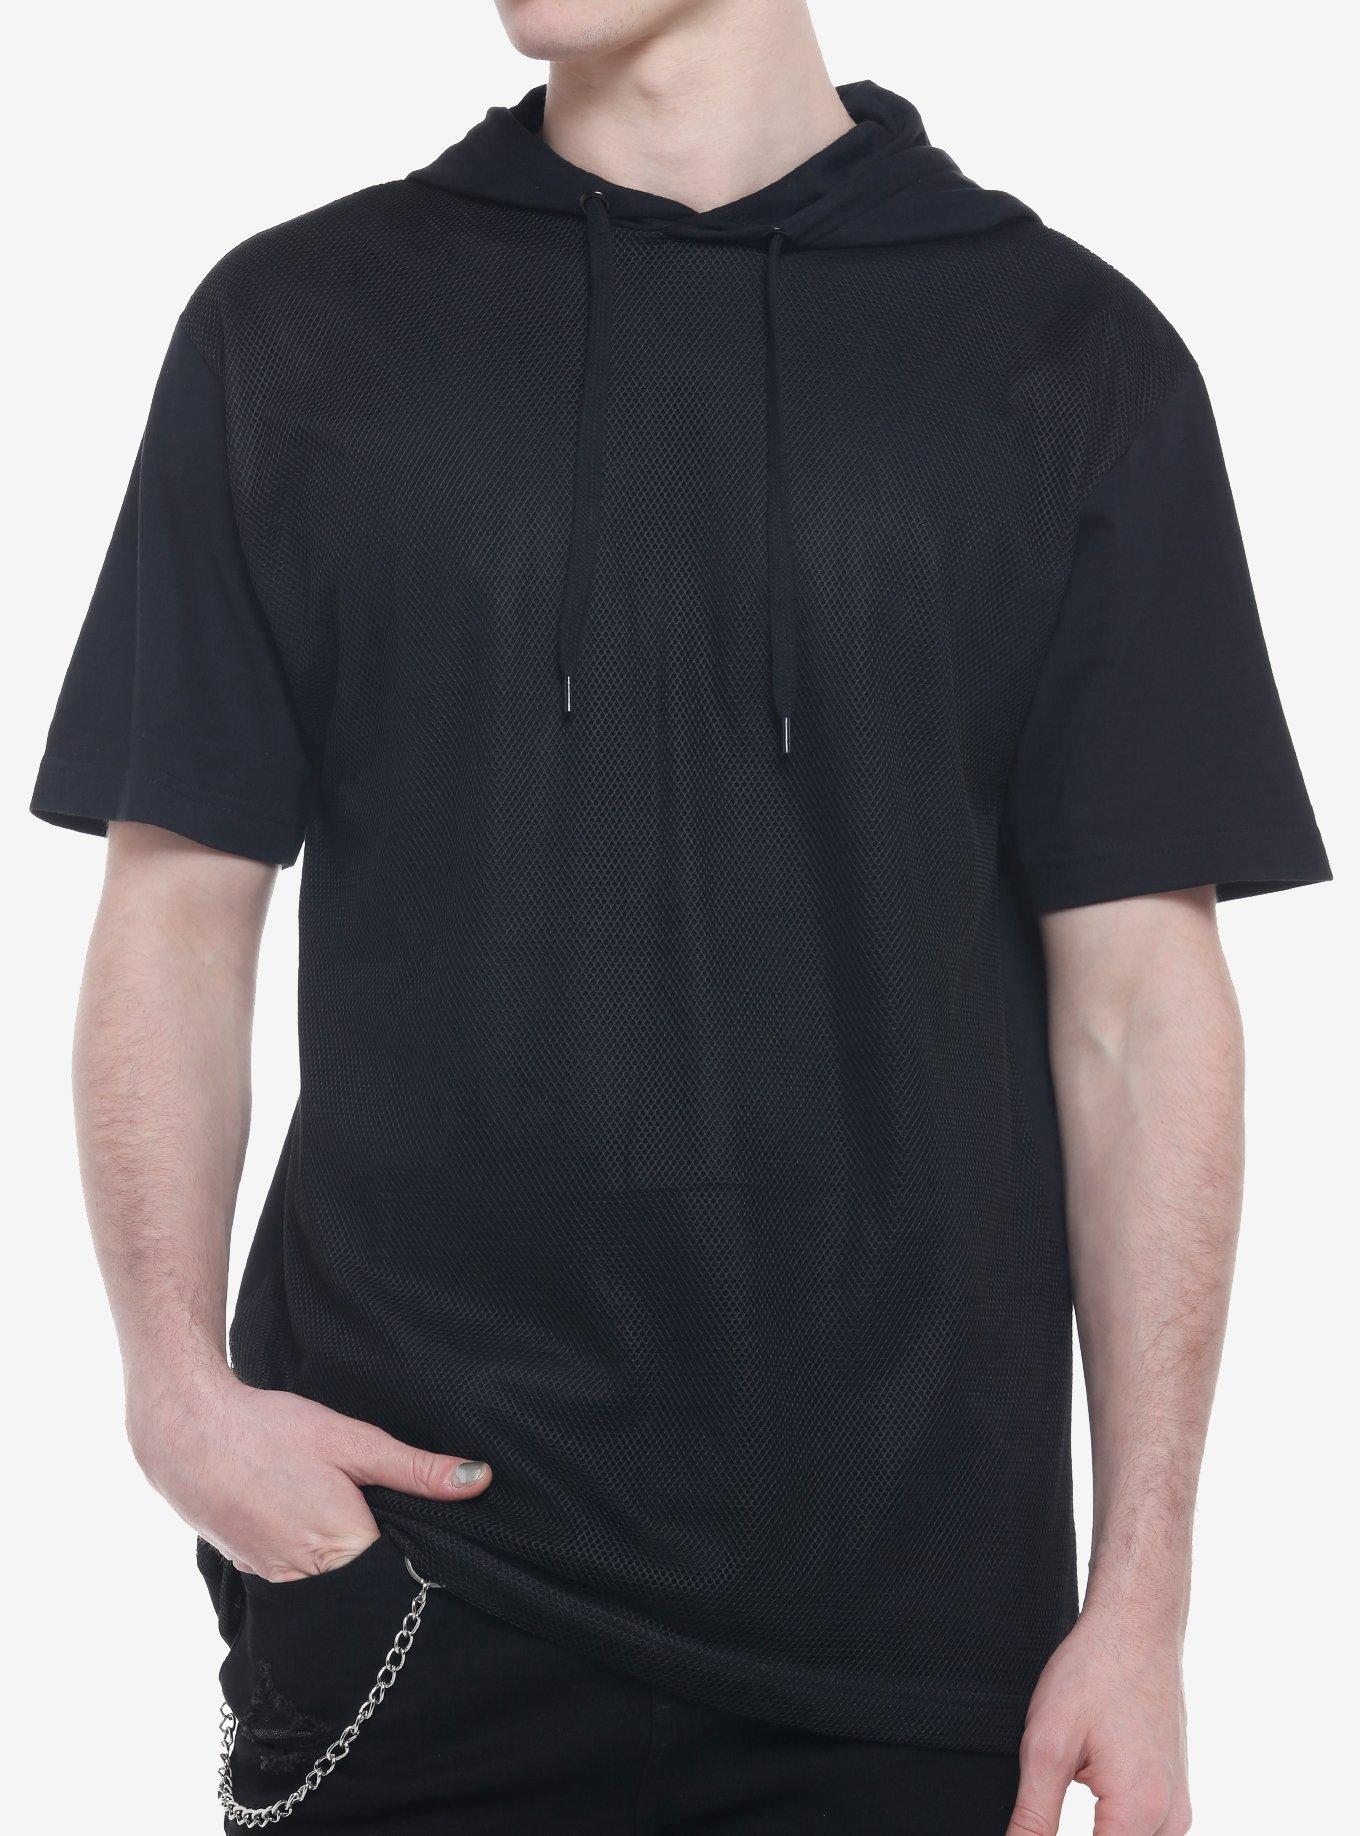 Black Mesh Hooded T-Shirt, BLACK, hi-res